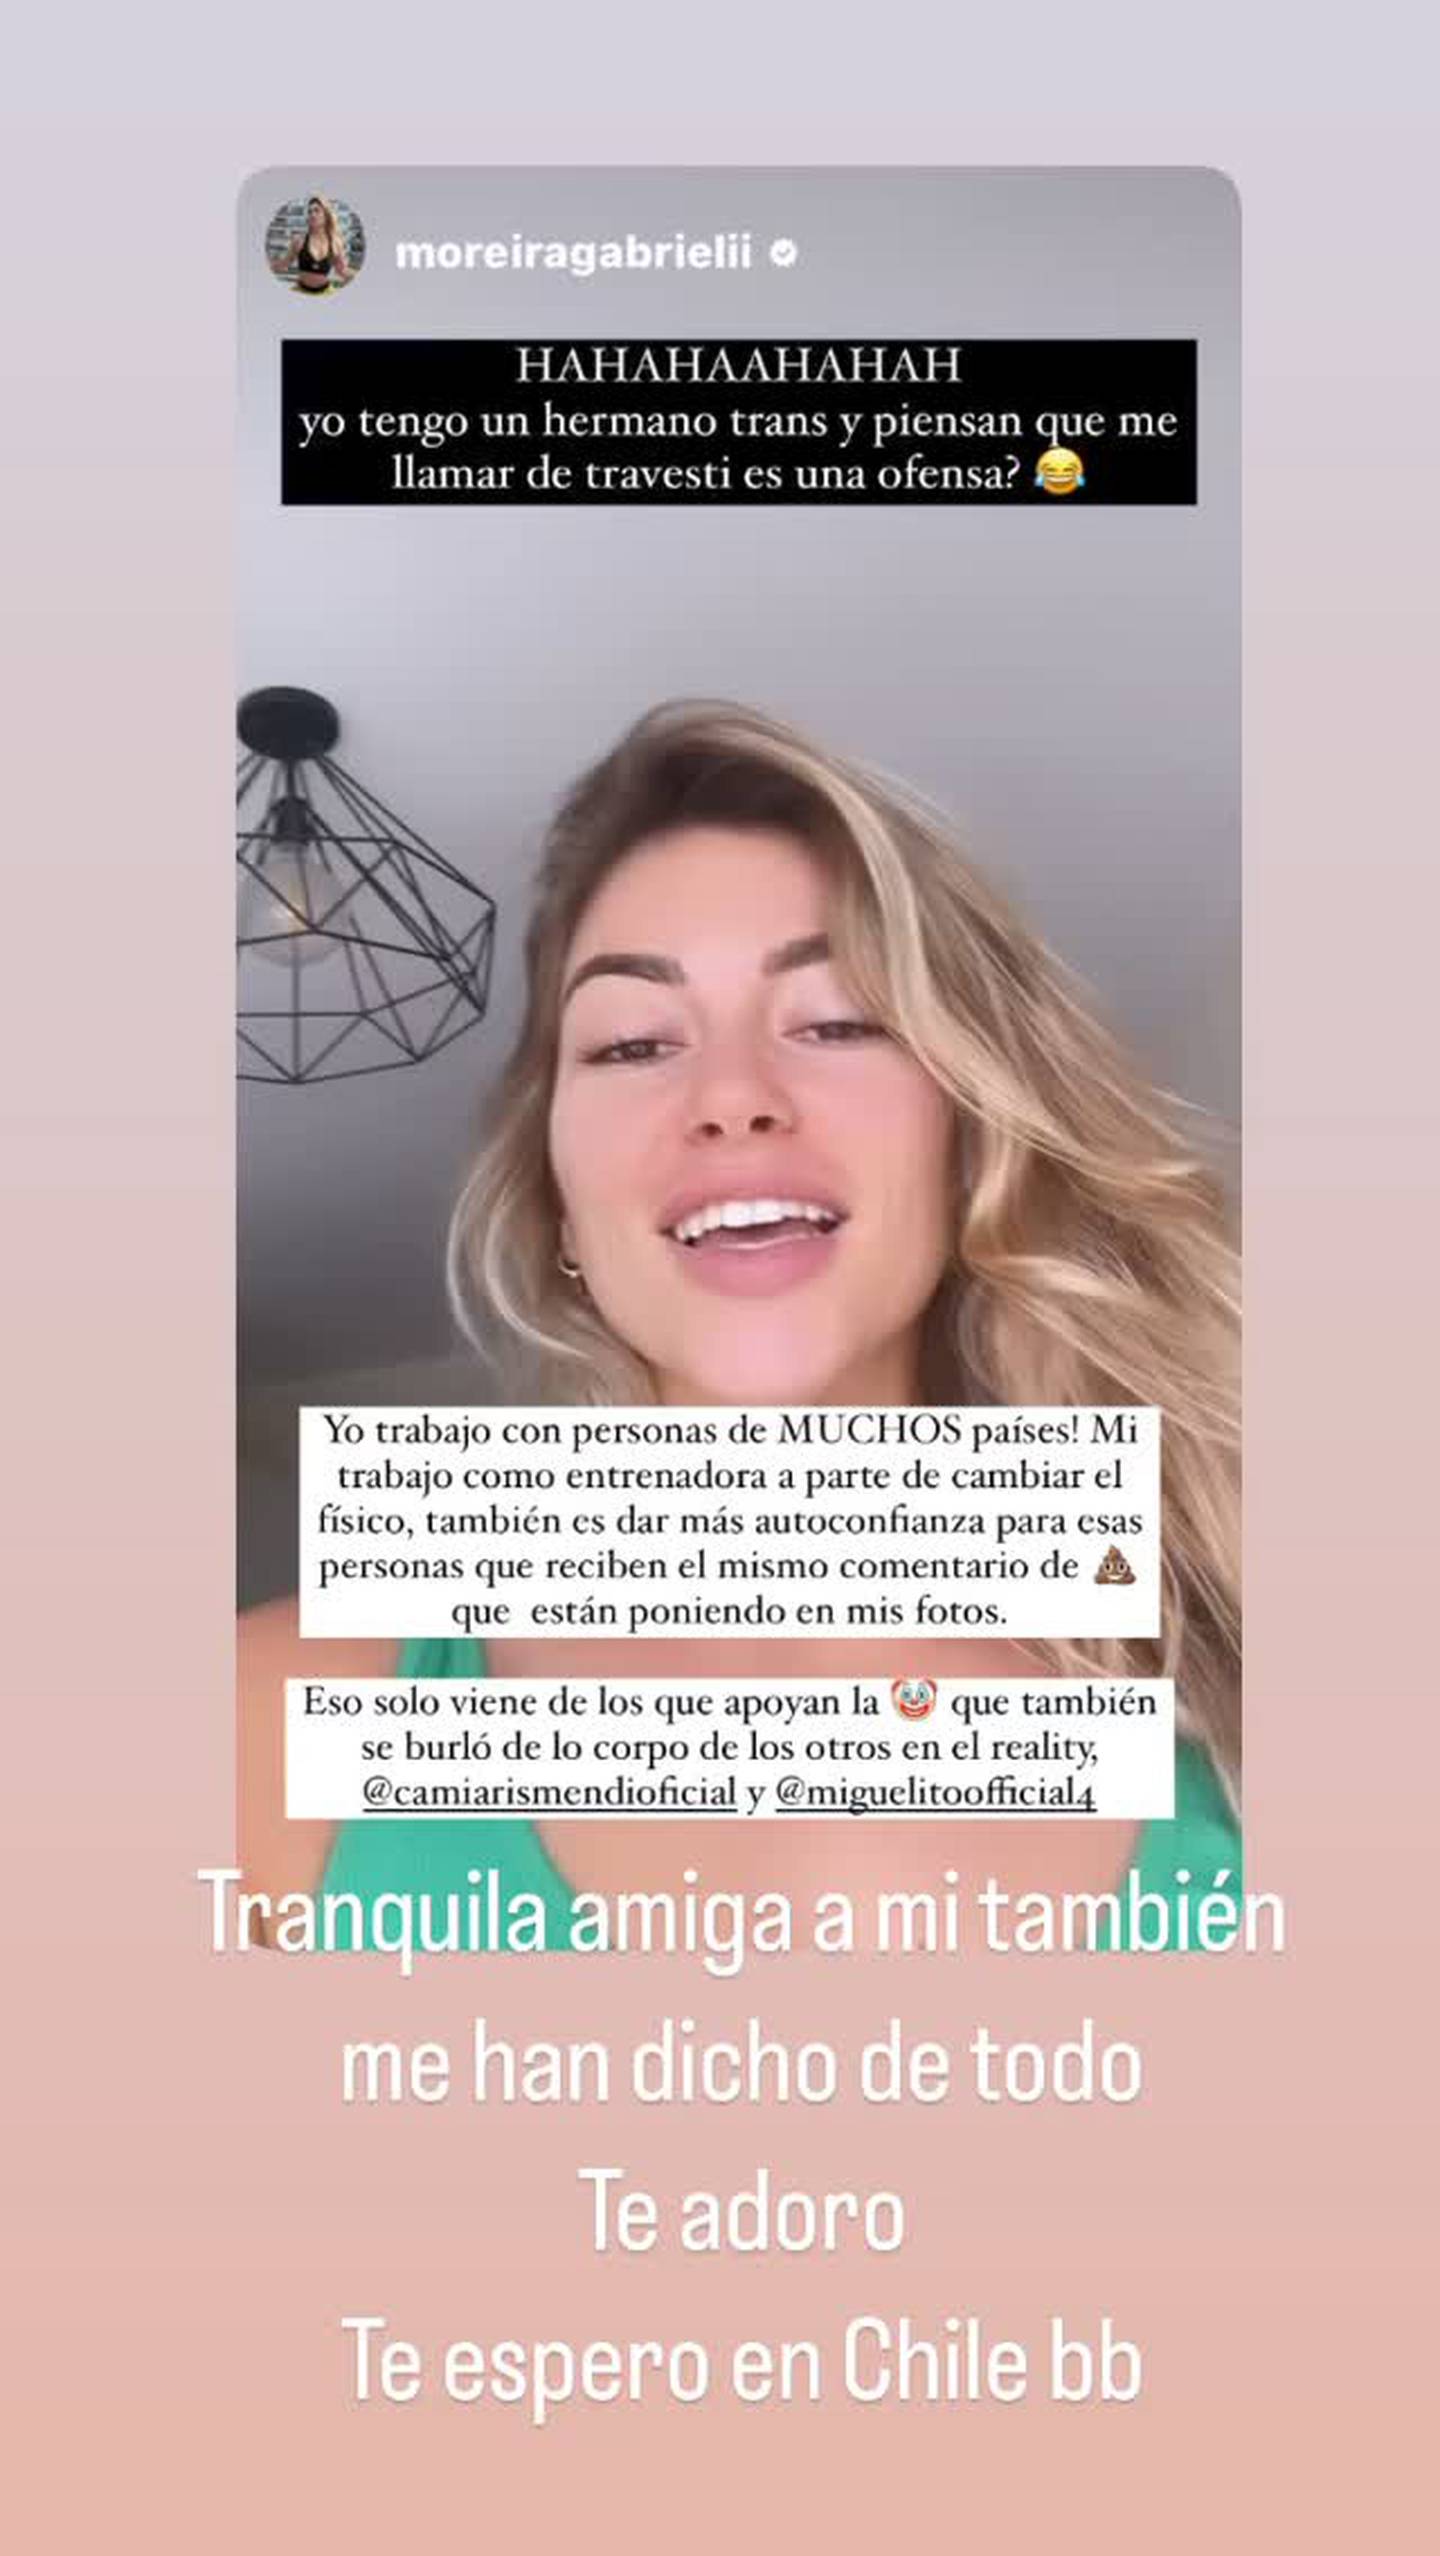 Camila Arismendi apoya a Gabrielli Moreira en Instagram